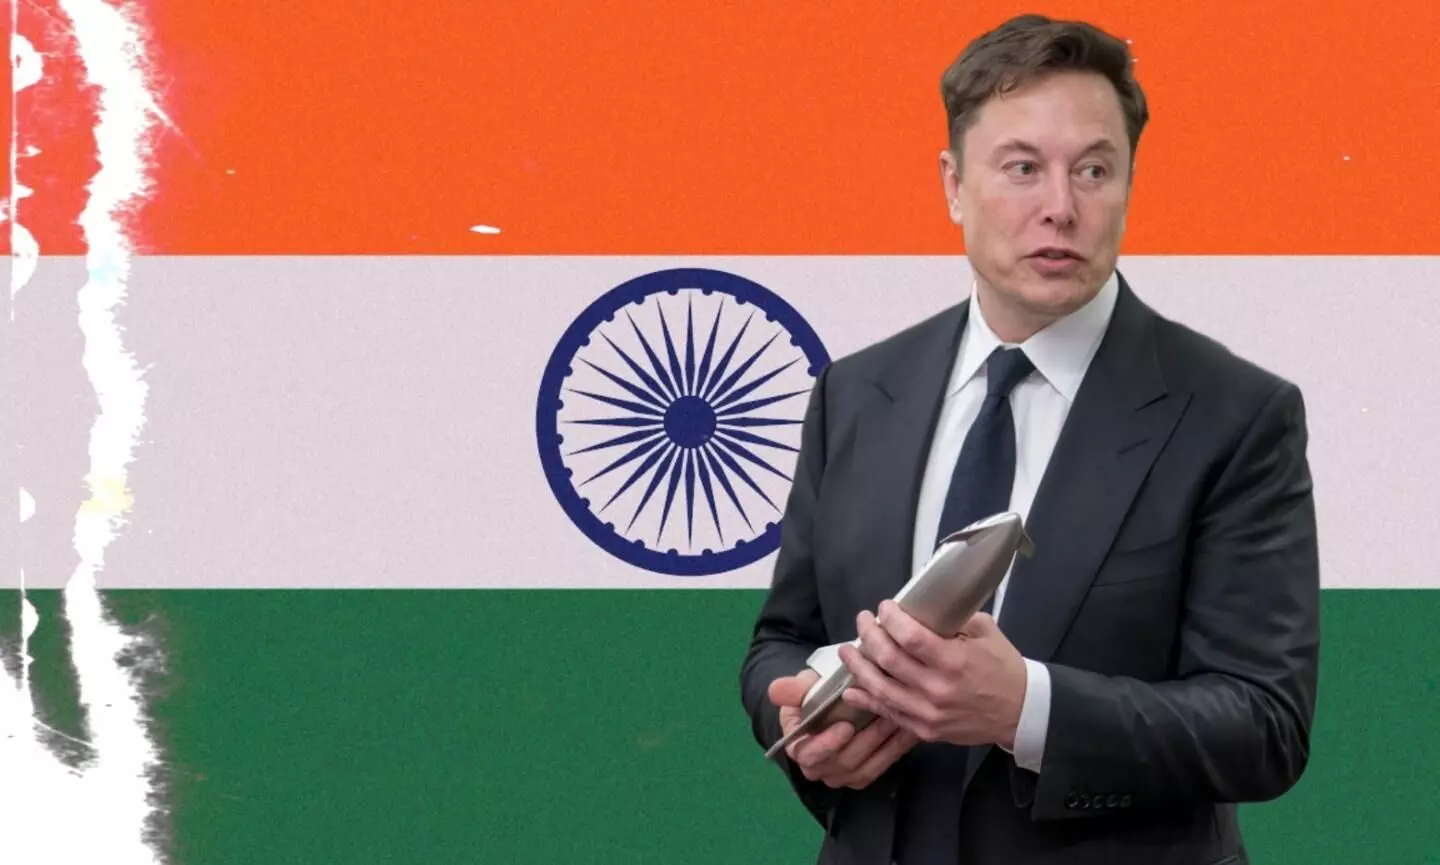 Elon Musks India visit delayed due to Tesla obligations